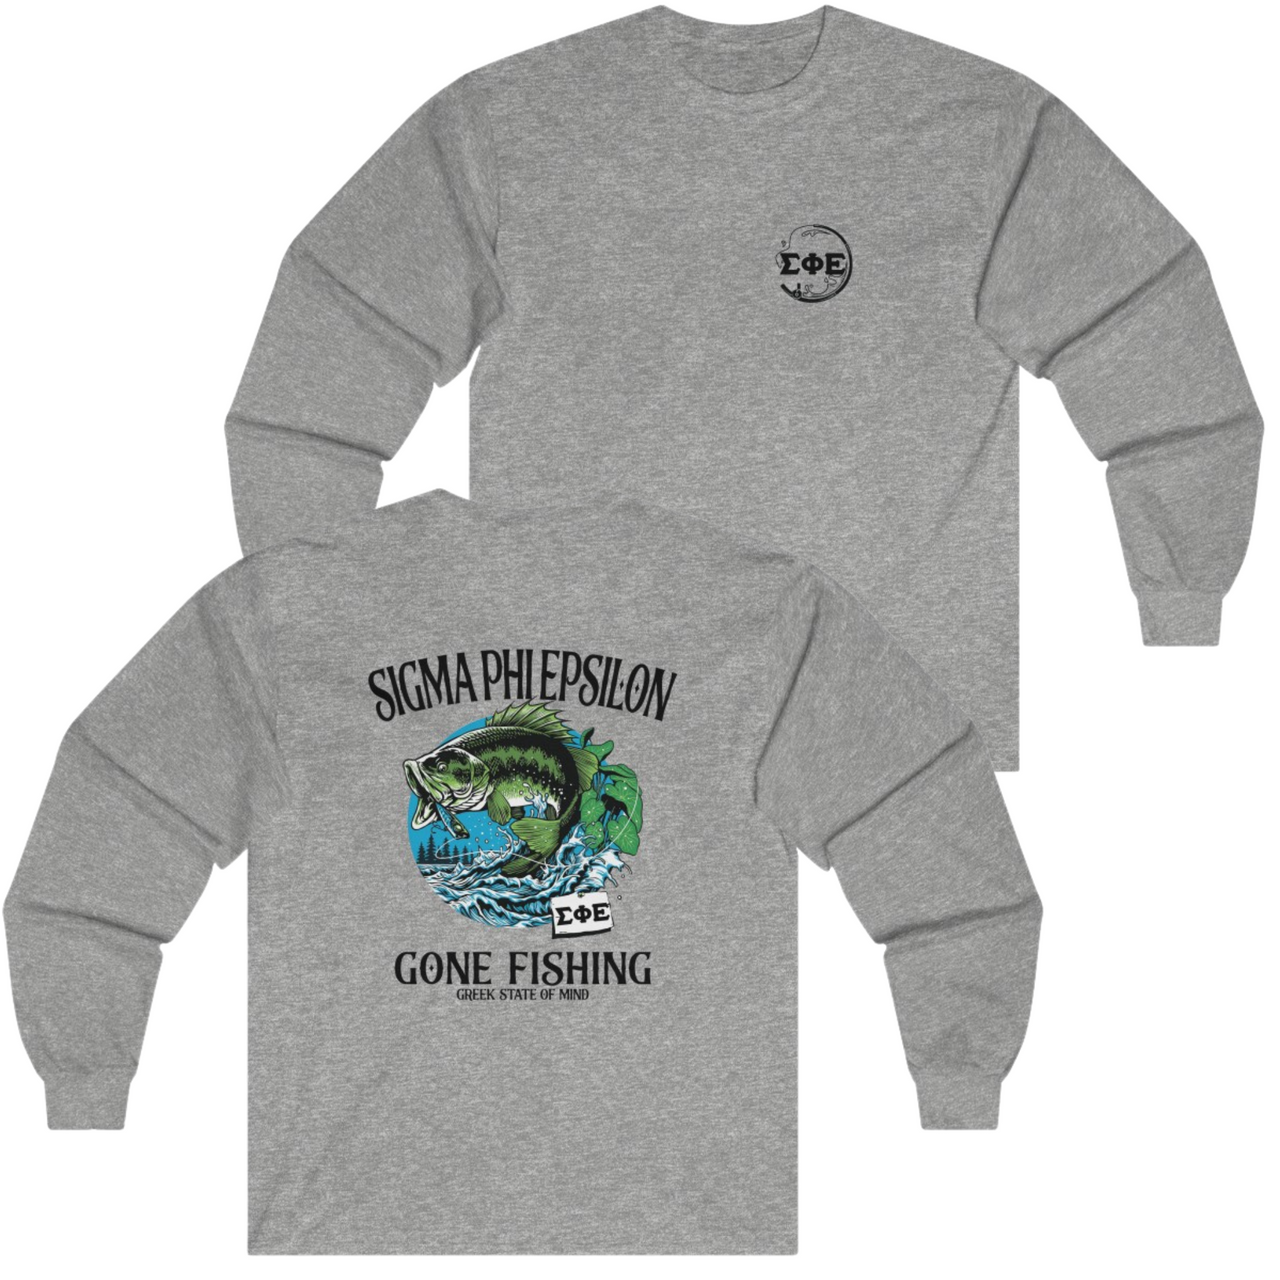 Grey Sigma Phi Epsilon Graphic Long Sleeve T-Shirt | Gone Fishing | SigEp Clothing - Campus Apparel